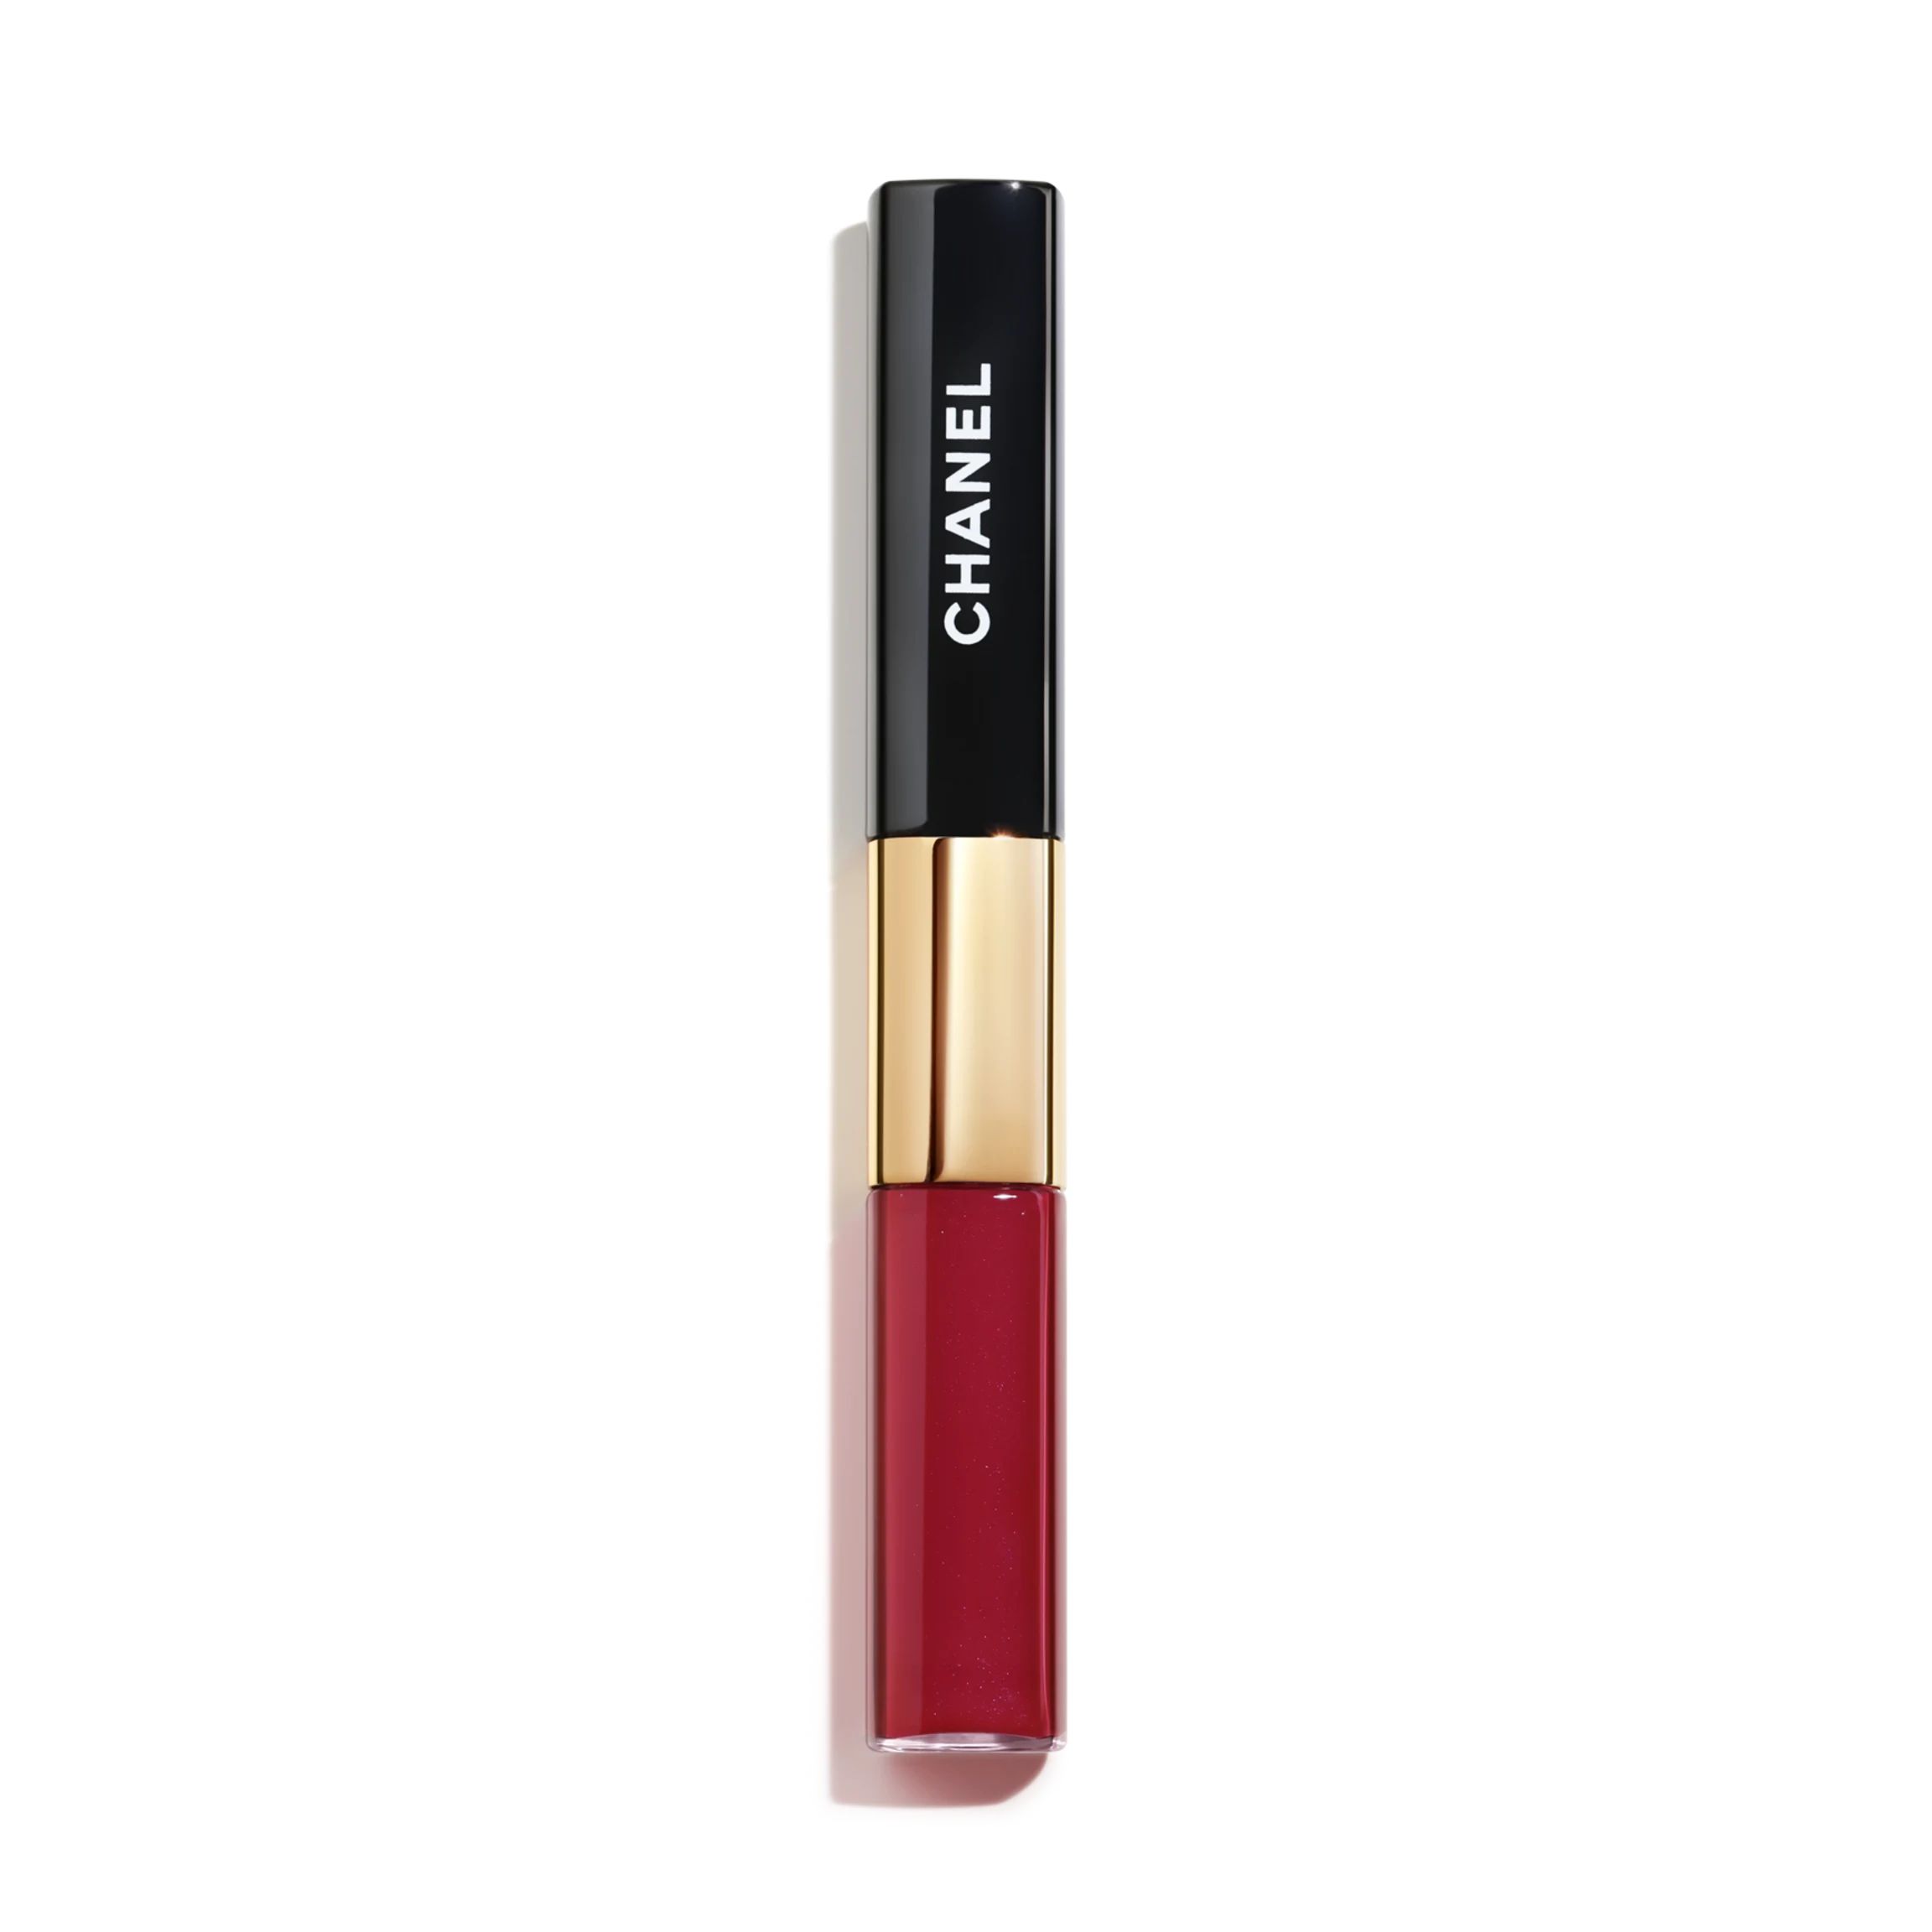 LE ROUGE DUO ULTRA TENUE

            
            Ultrawear Liquid Lip Colour | Chanel, Inc. (US)